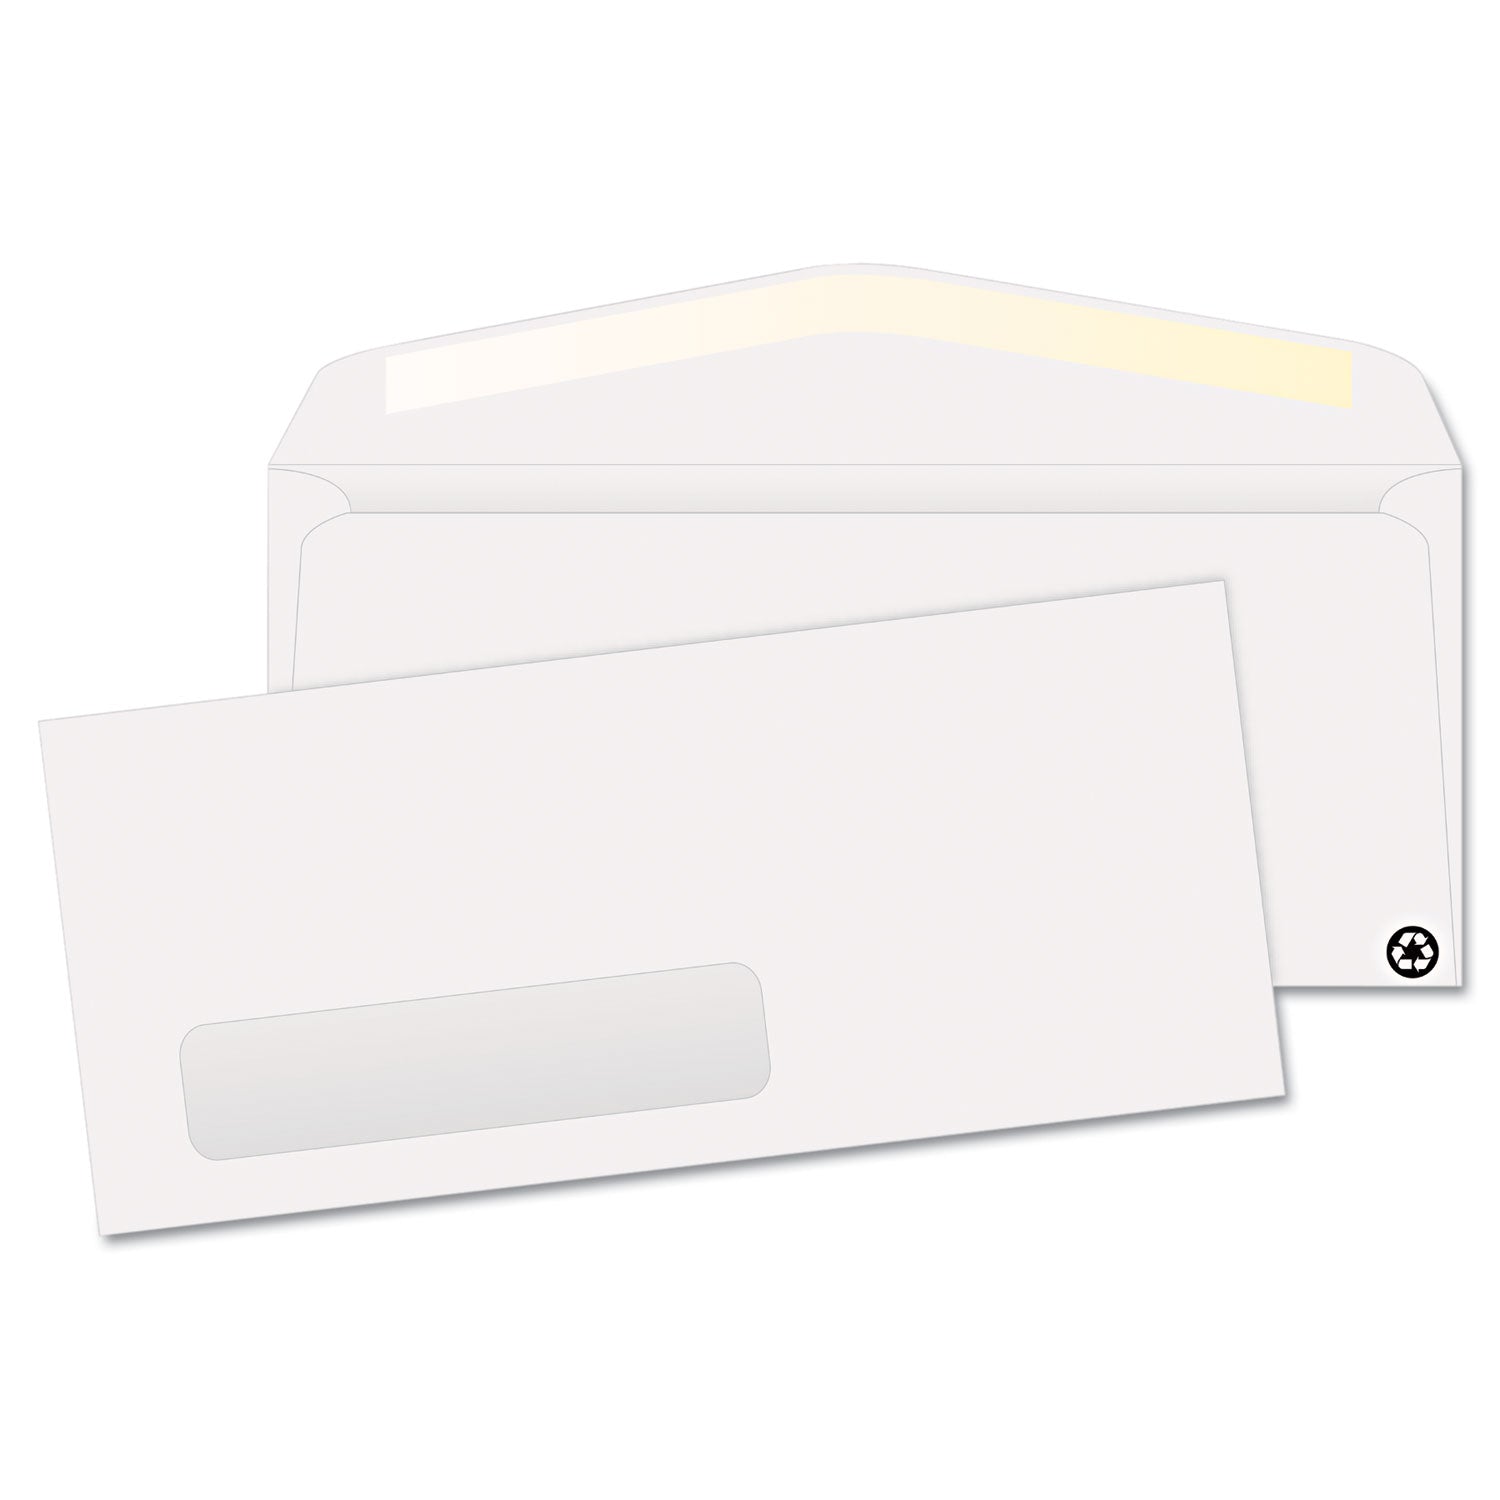 Address-Window Security-Tint Envelope, #10, Commercial Flap, Gummed Closure, 4.13 x 9.5, White, 500/Box - 